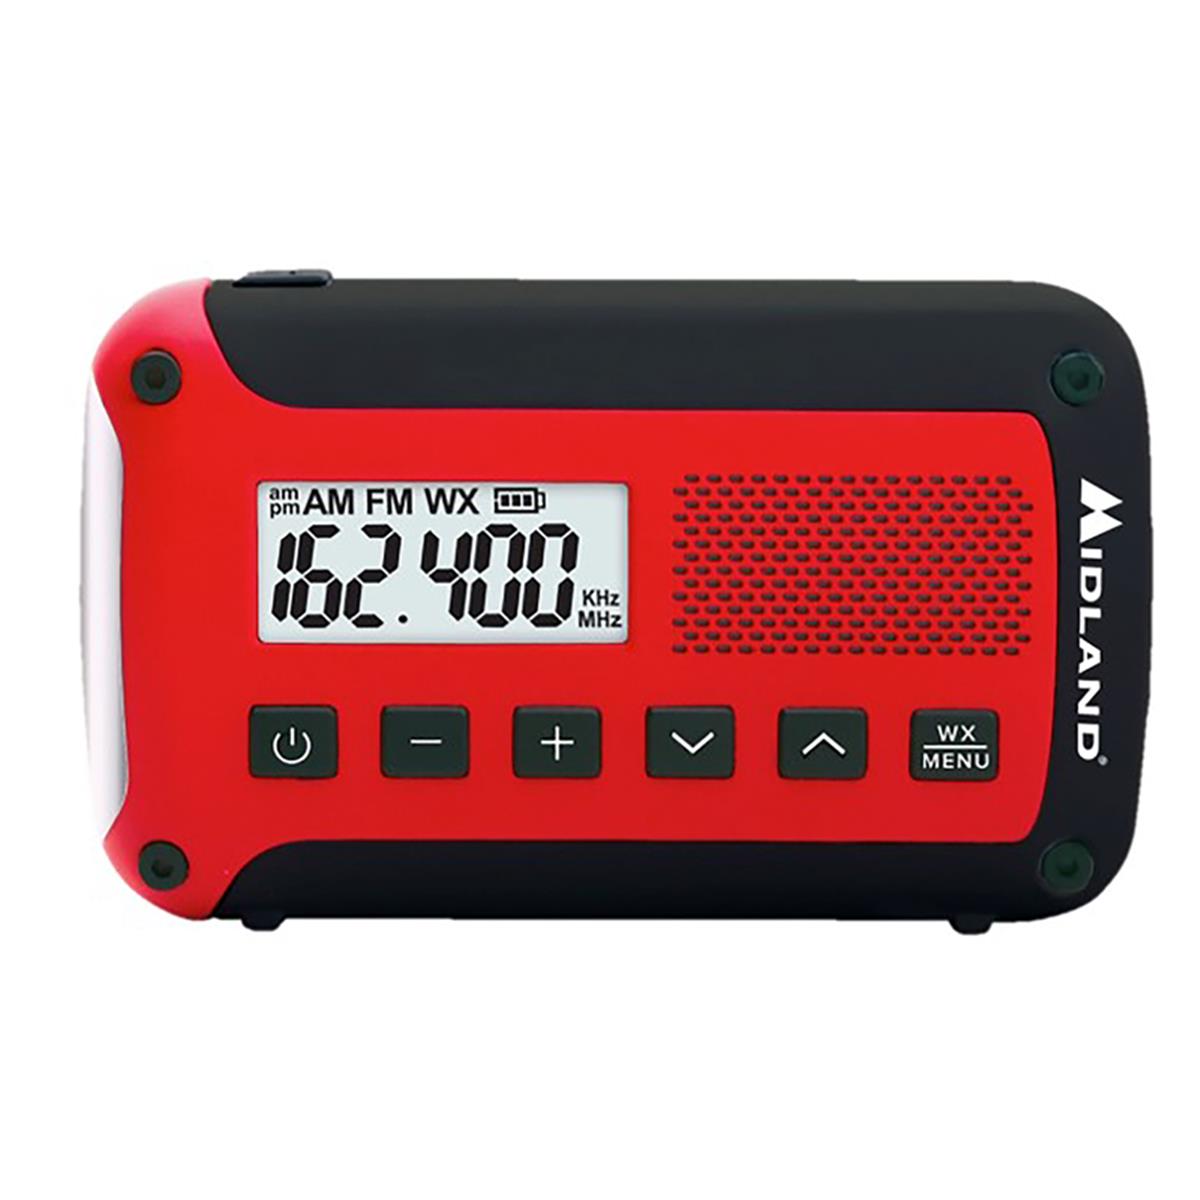 6024265 Digital Battery Operated Emergency Weather Radio, Red -  MIDLAND RADIO